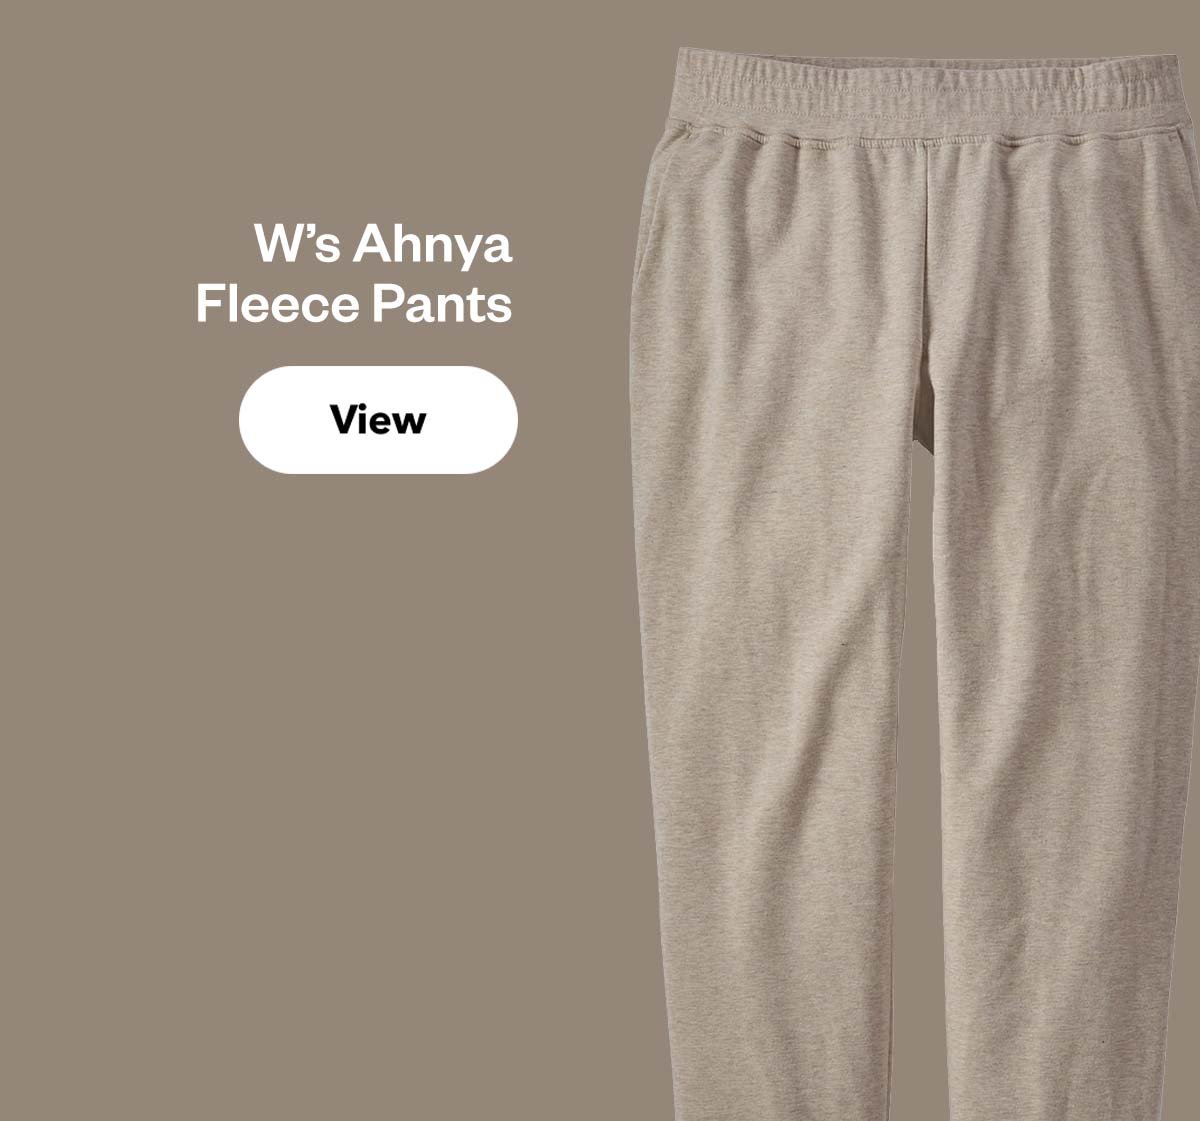 W’s Ahnya Fleece Pants